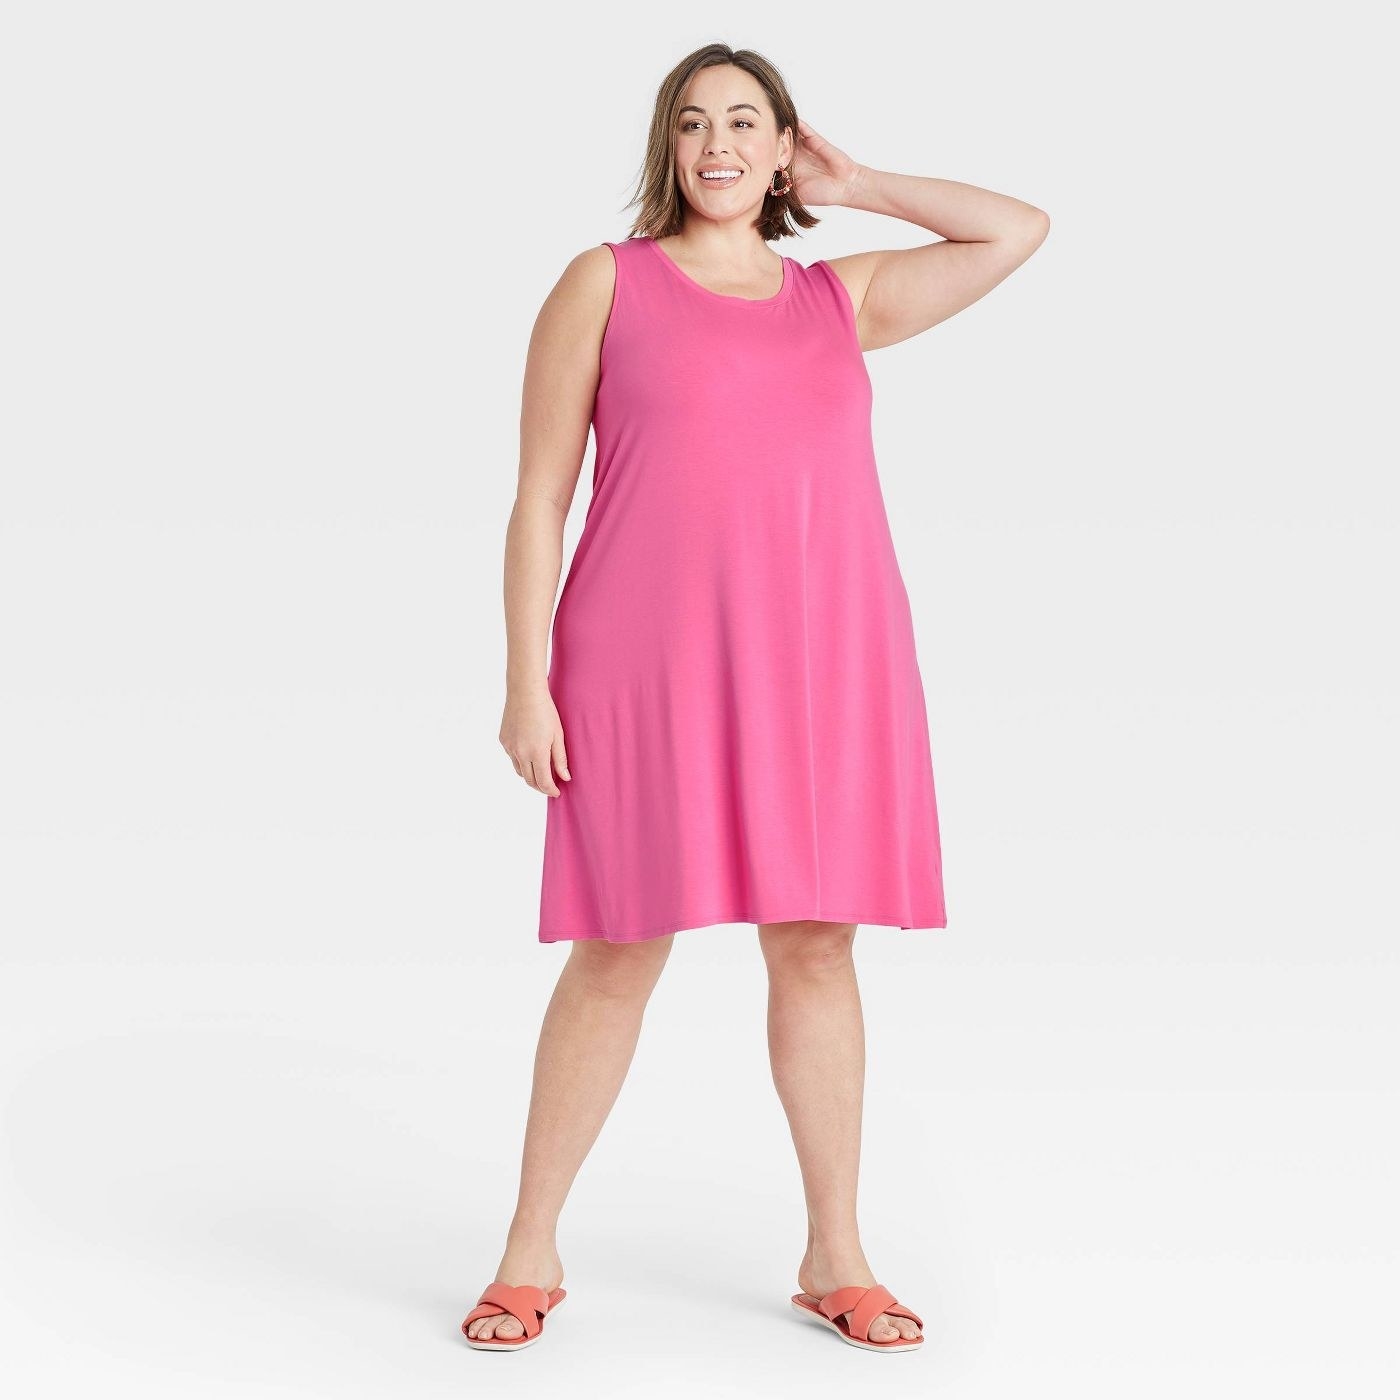 A model wearing a pink sleeveless knit dress